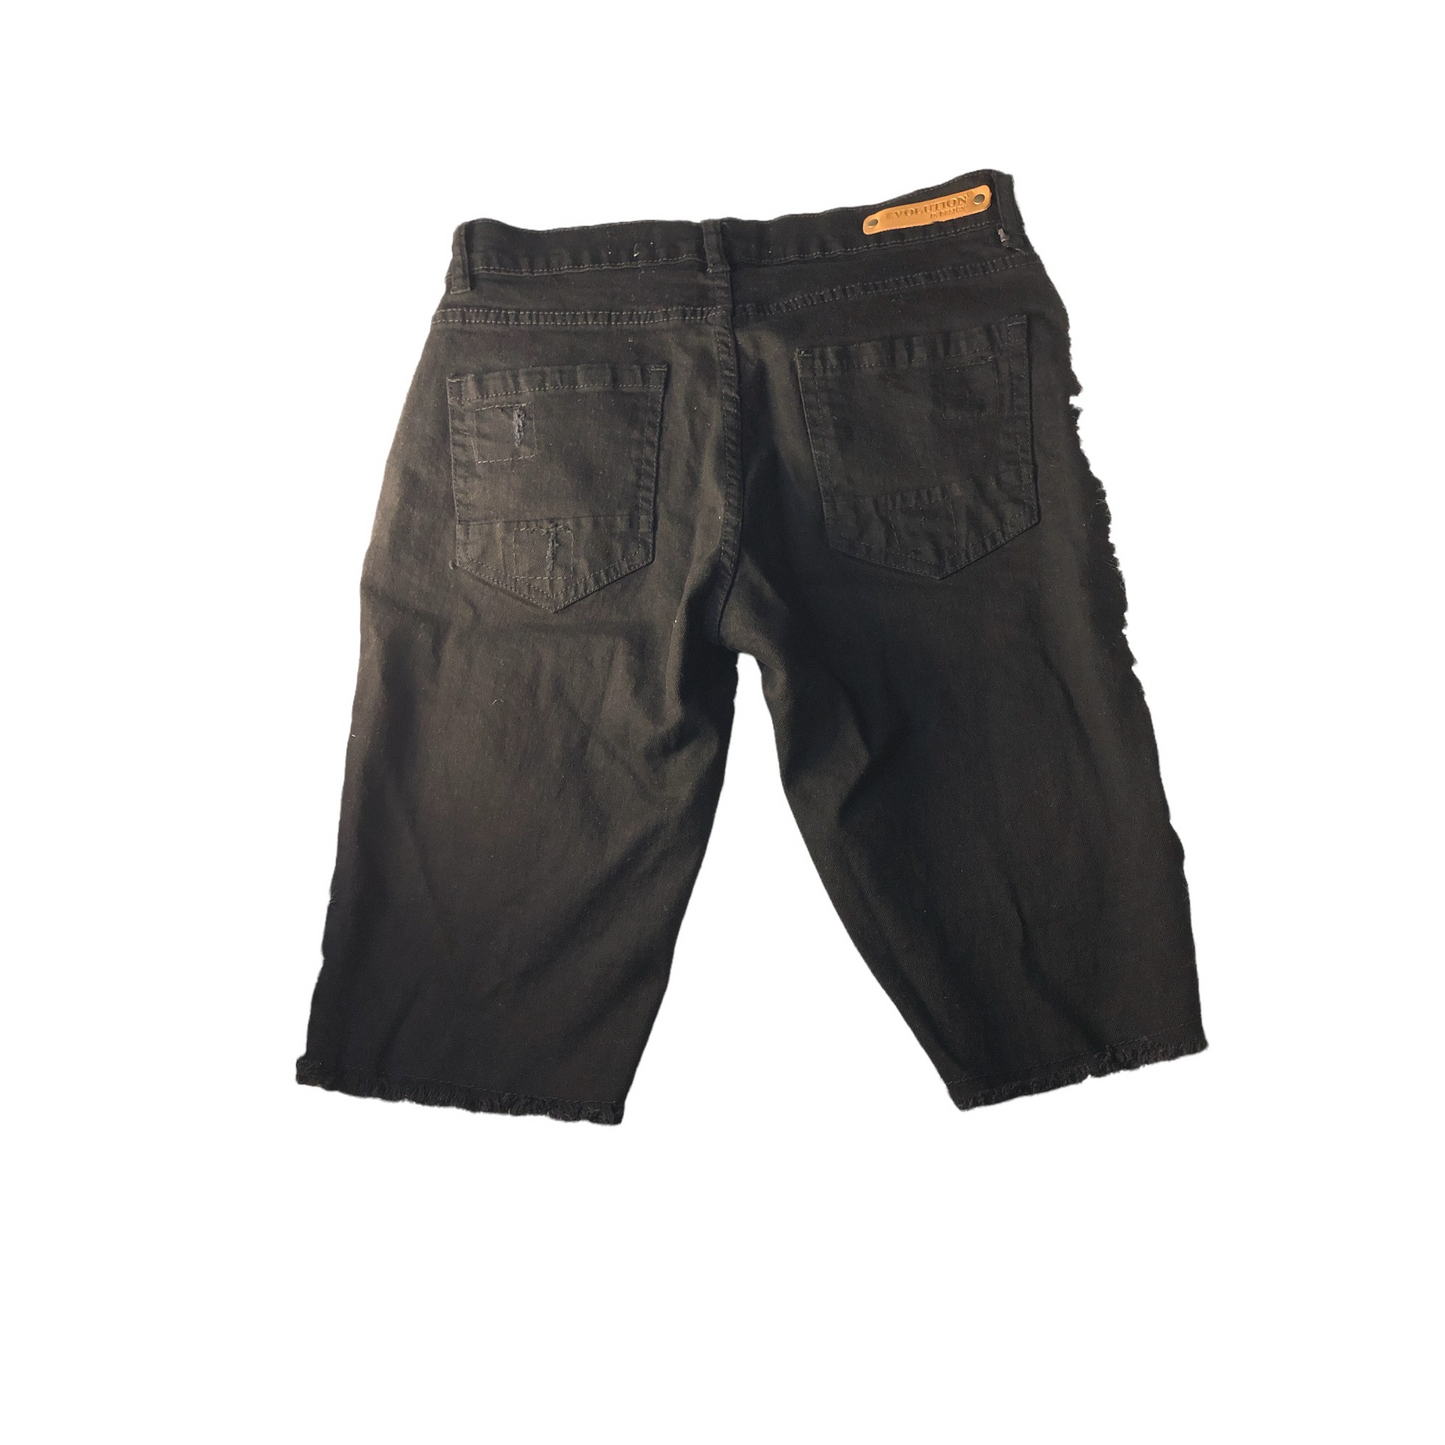 Boy's Black Jean Shorts - Variety Sales Etc.